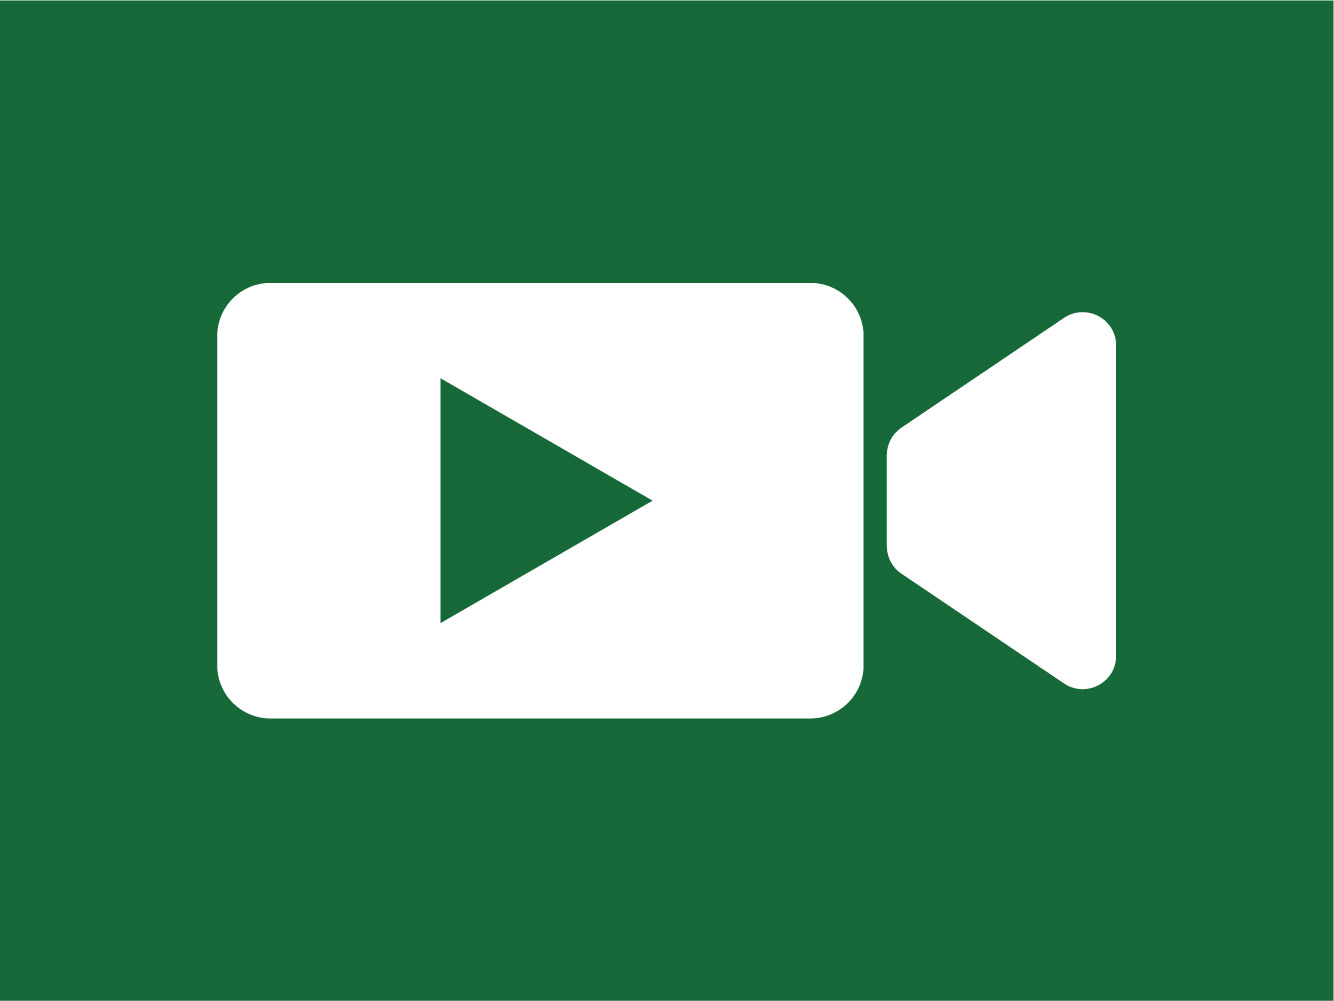 White video icon on green background